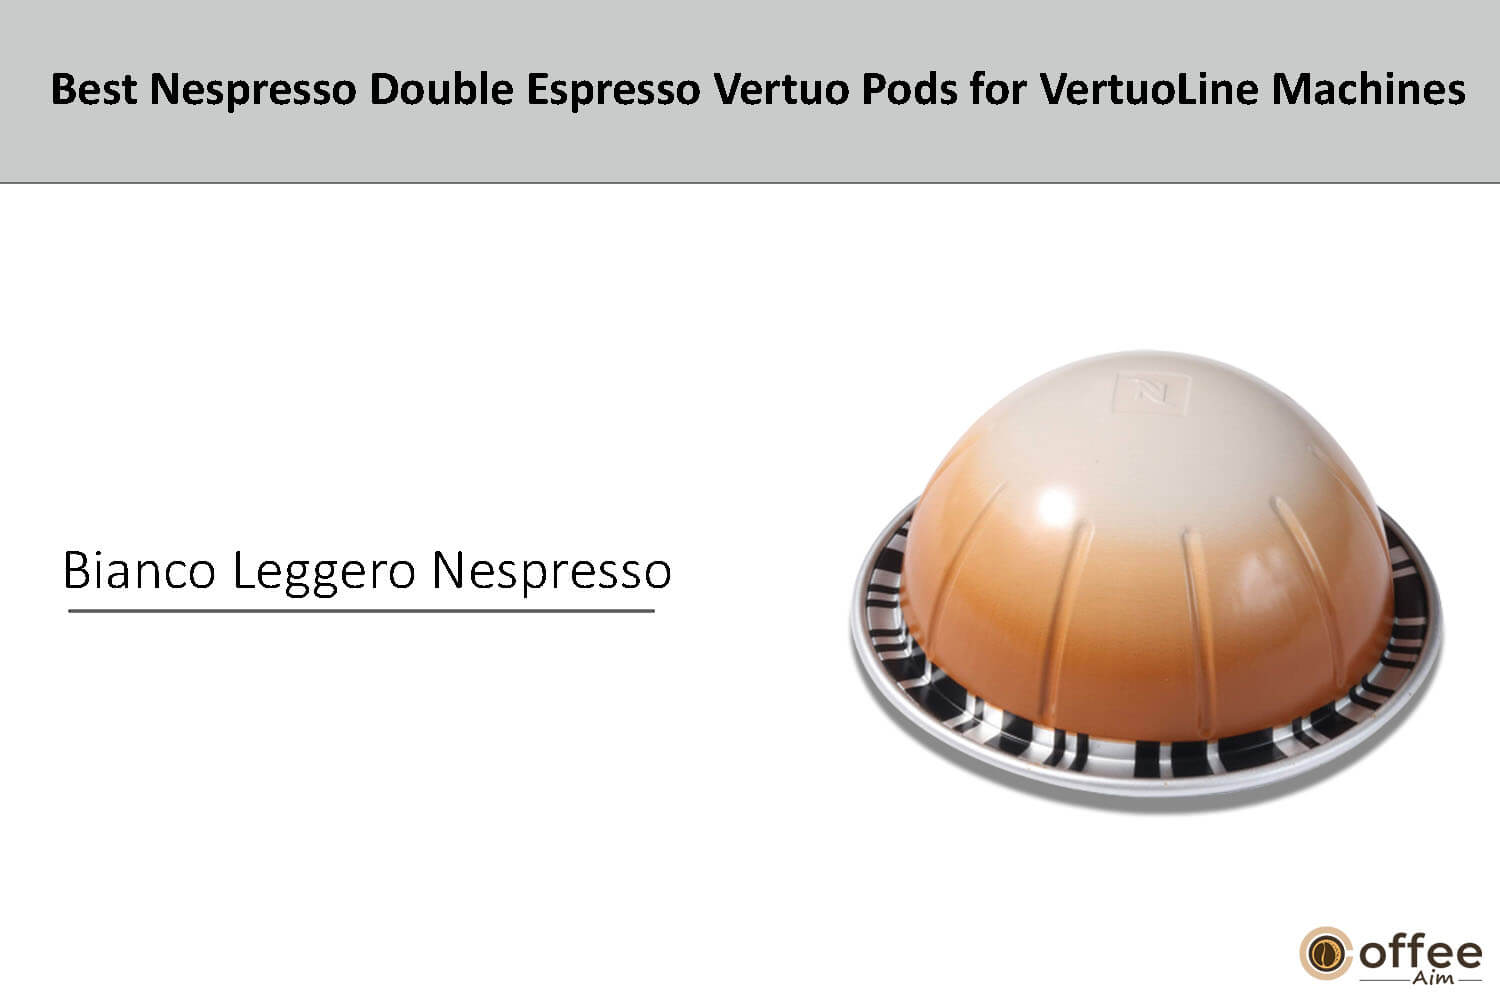 In this image, I'll explain double bianco leggero nespresso.